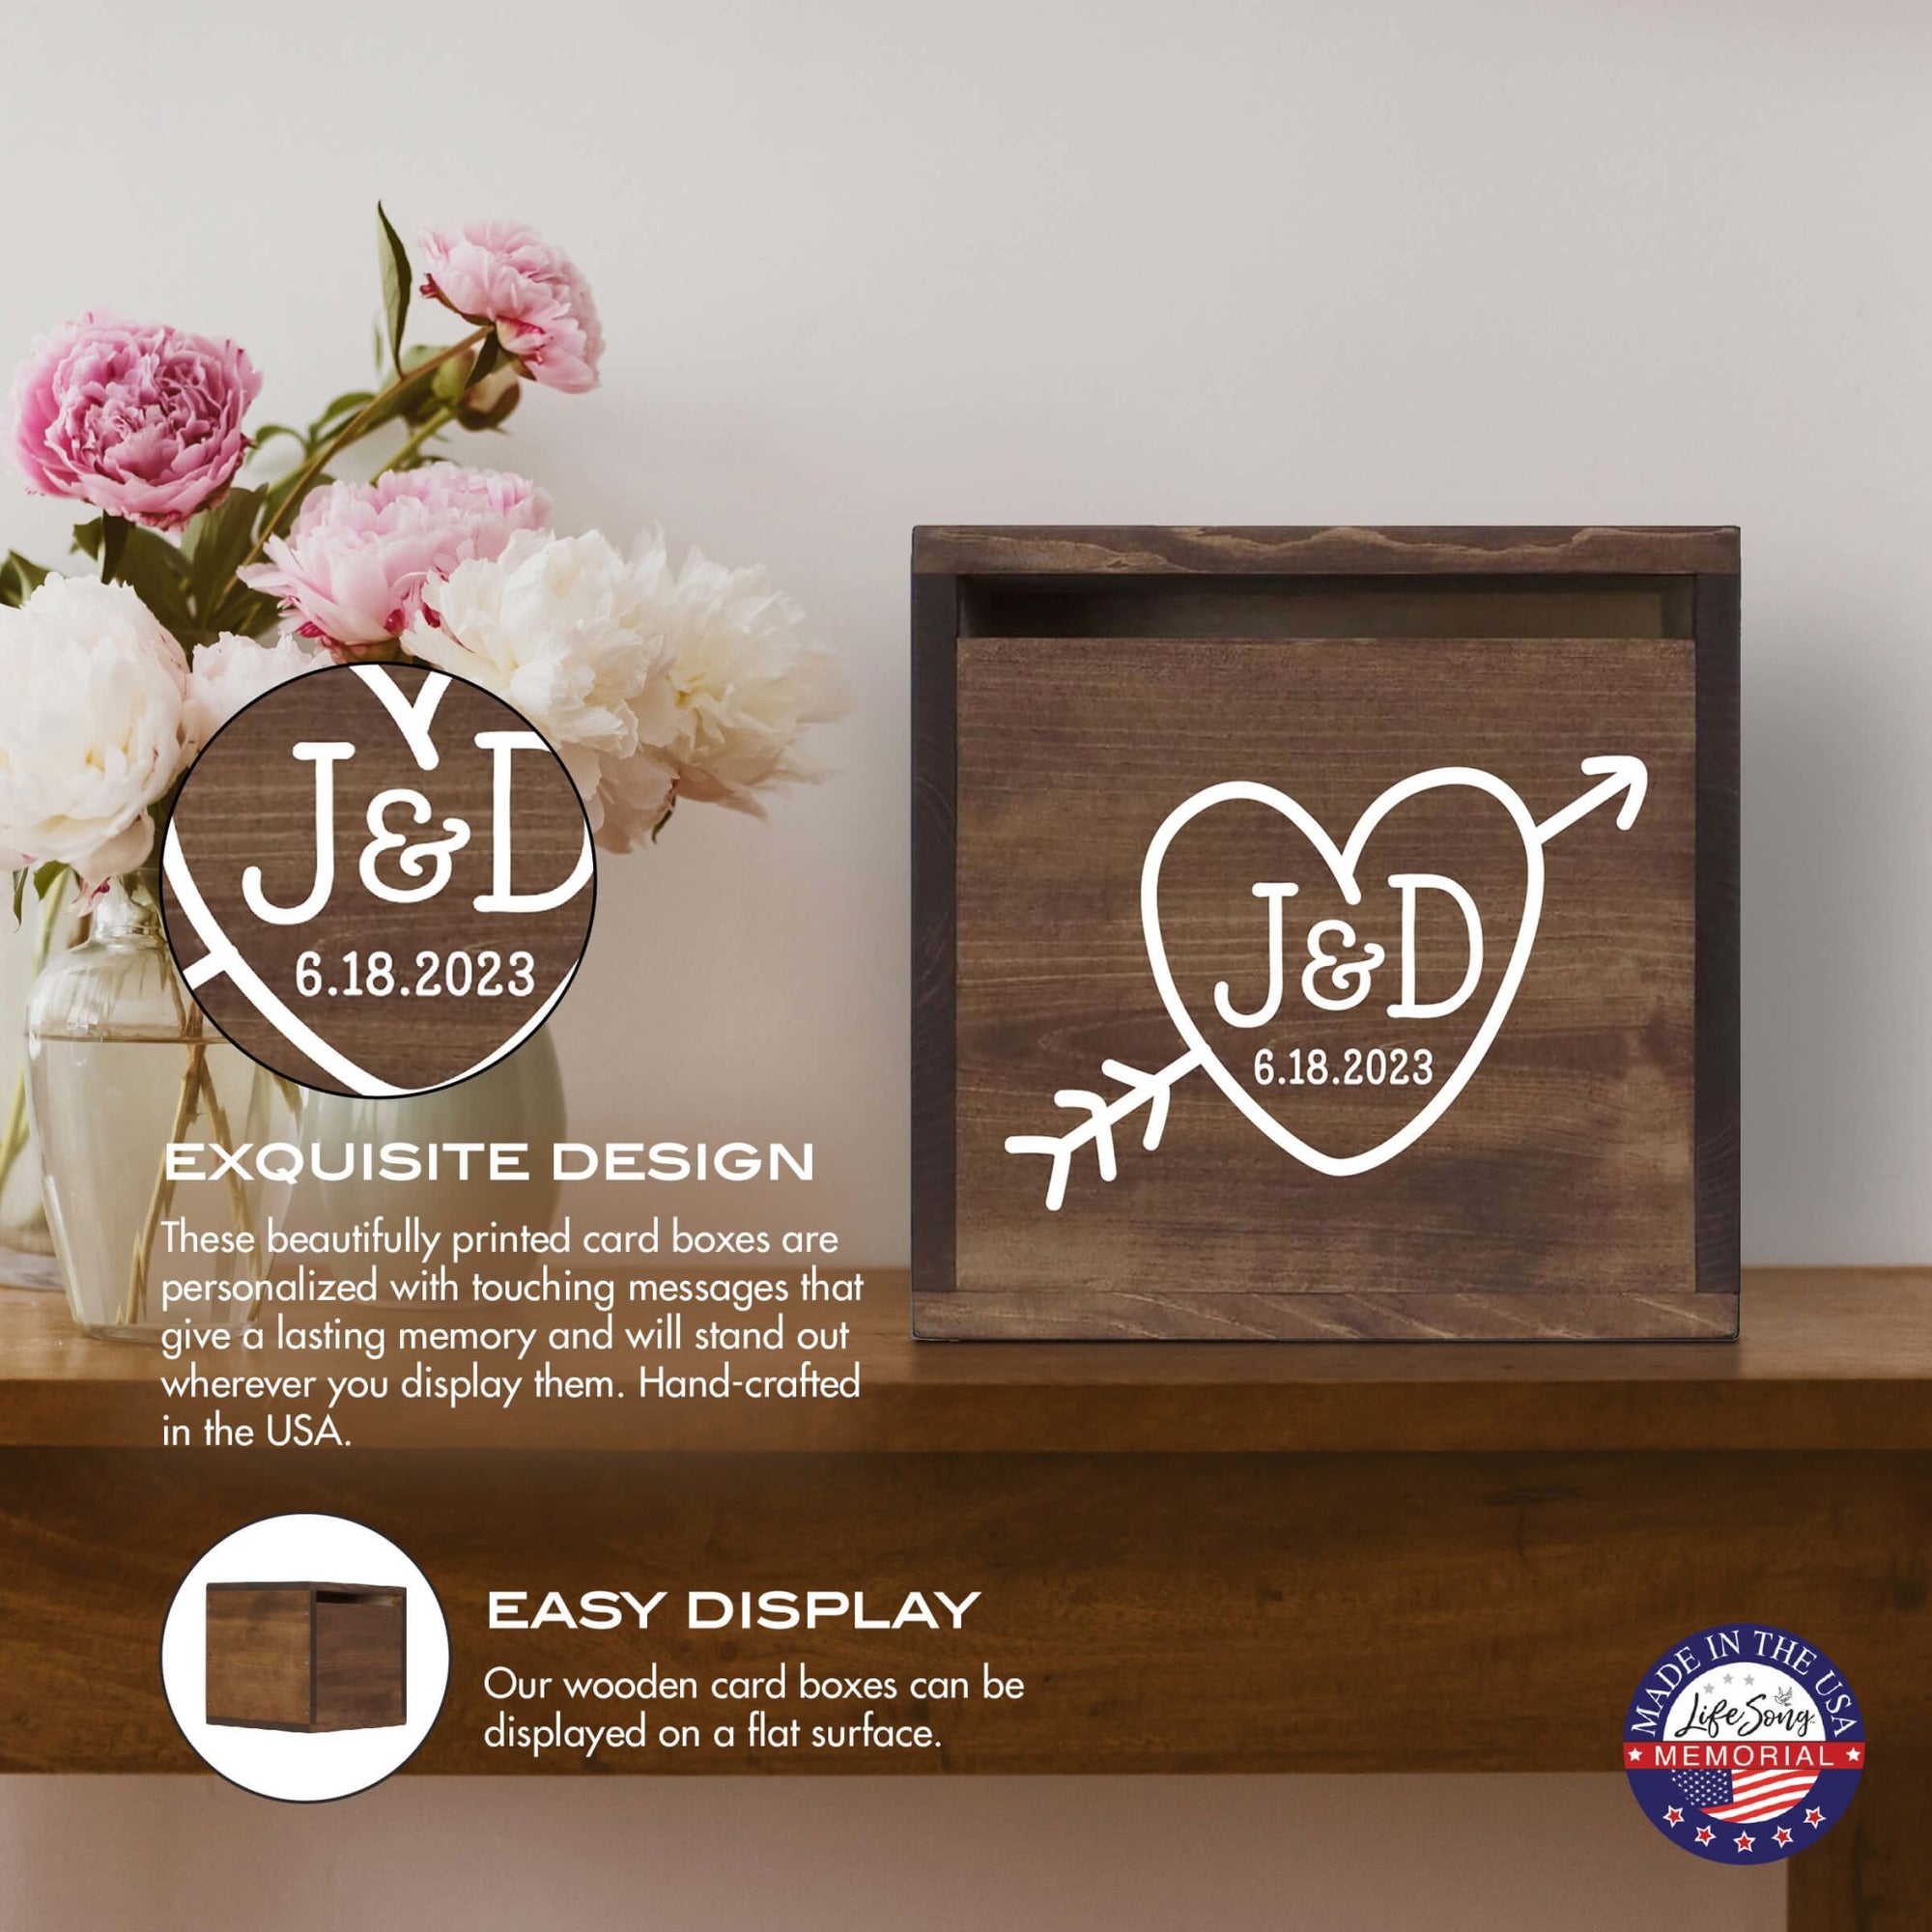 Elegant and Durable Pine Wood Wedding Card Box (Bob & Cathy) - LifeSong Milestones